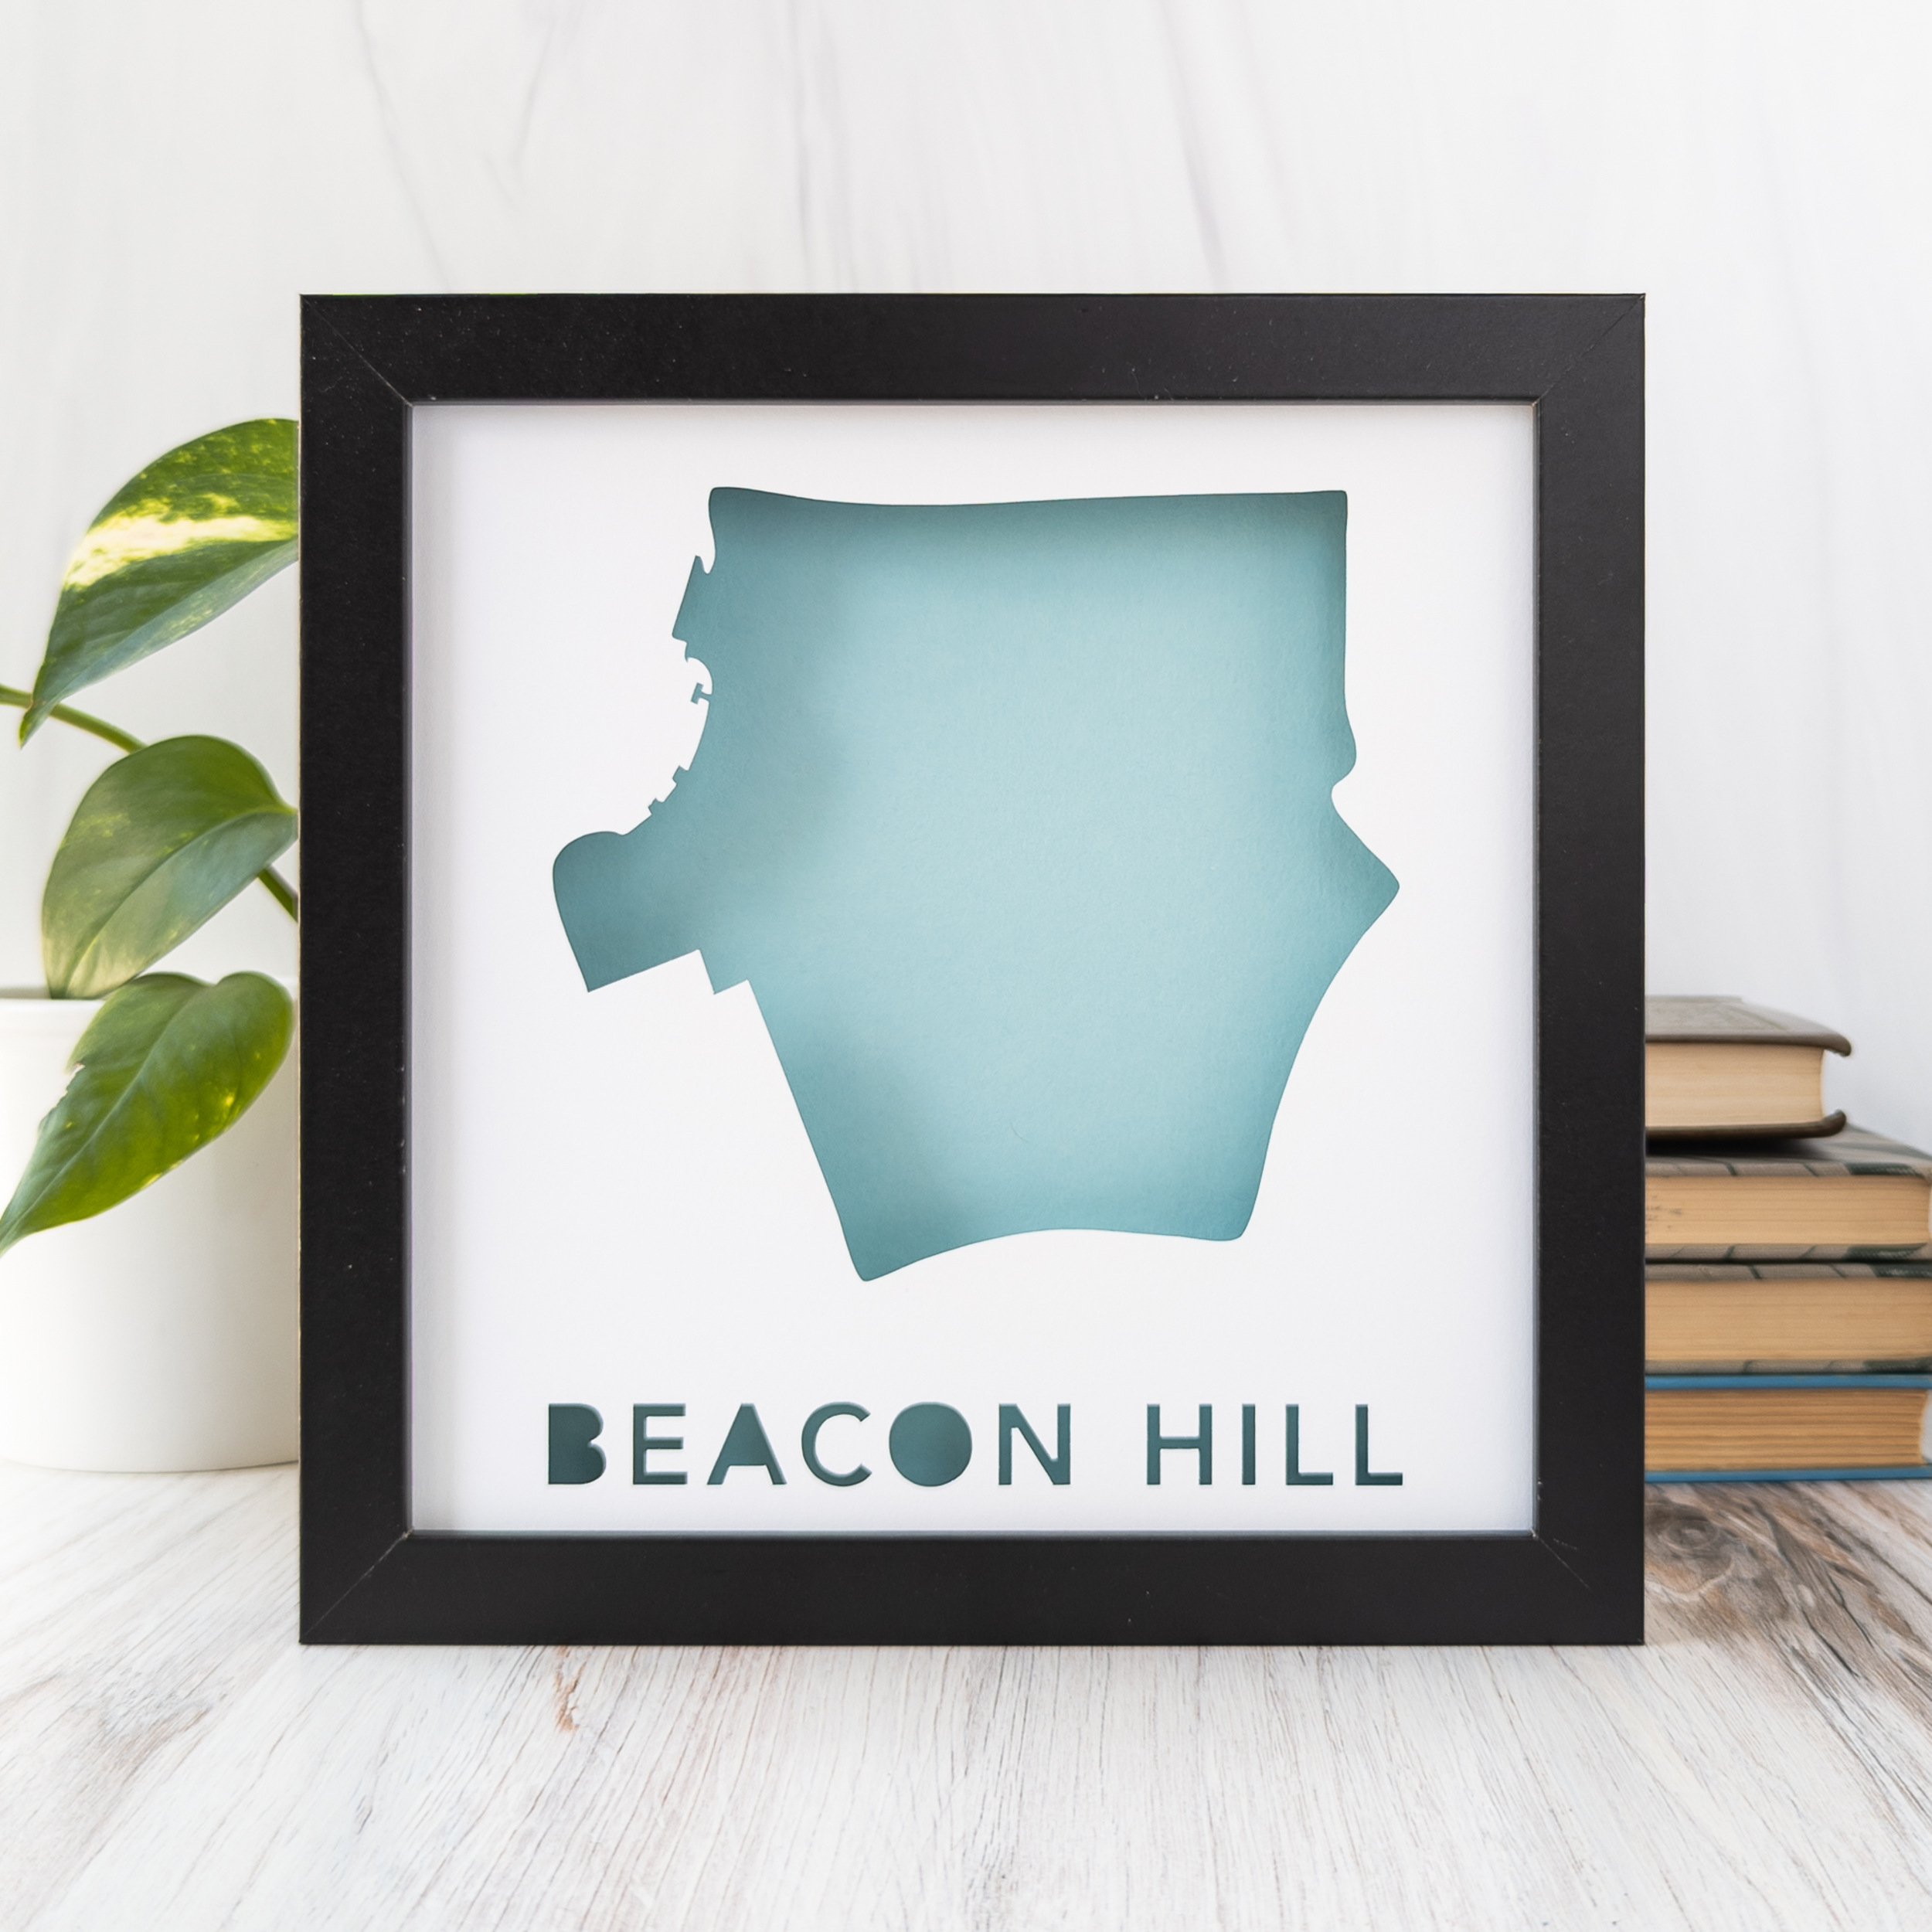 a framed light blue map of the Boston, MA neighborhood of Beacon Hill